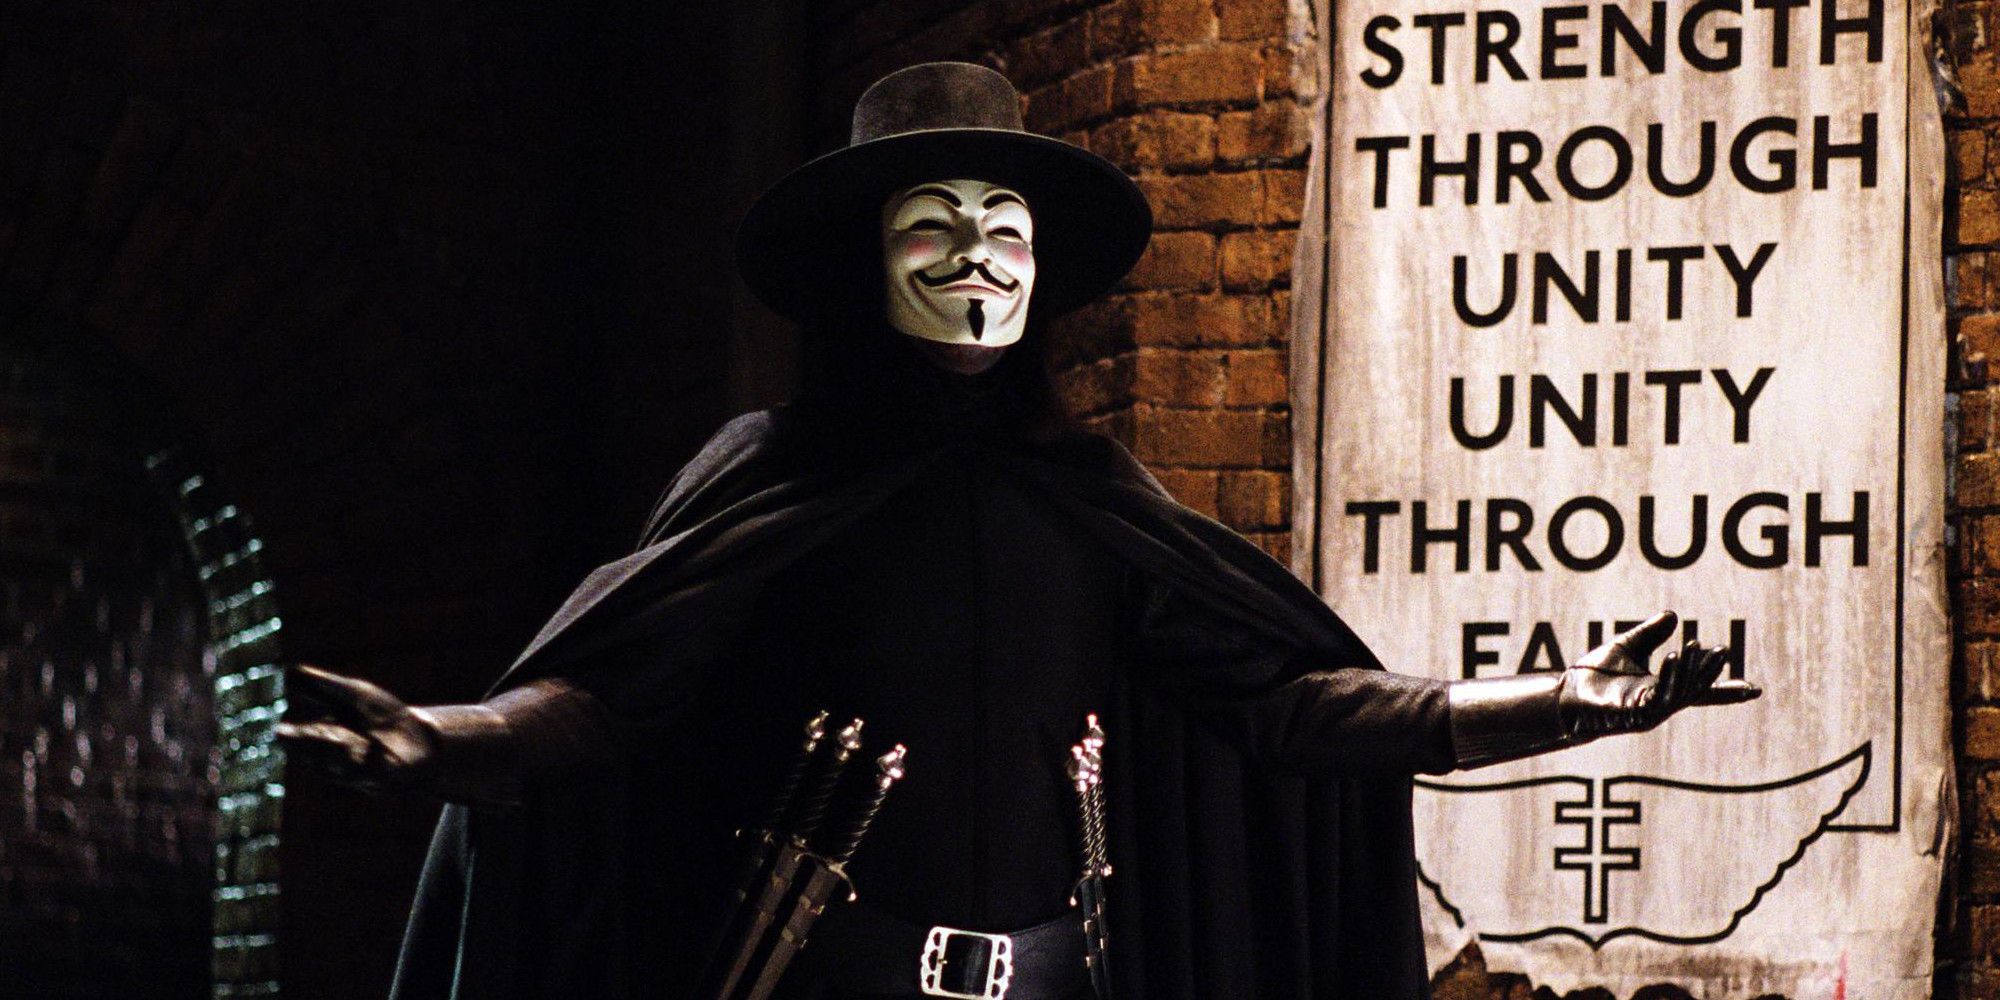 Guy Fawkes walks into the room in V For Vendetta 